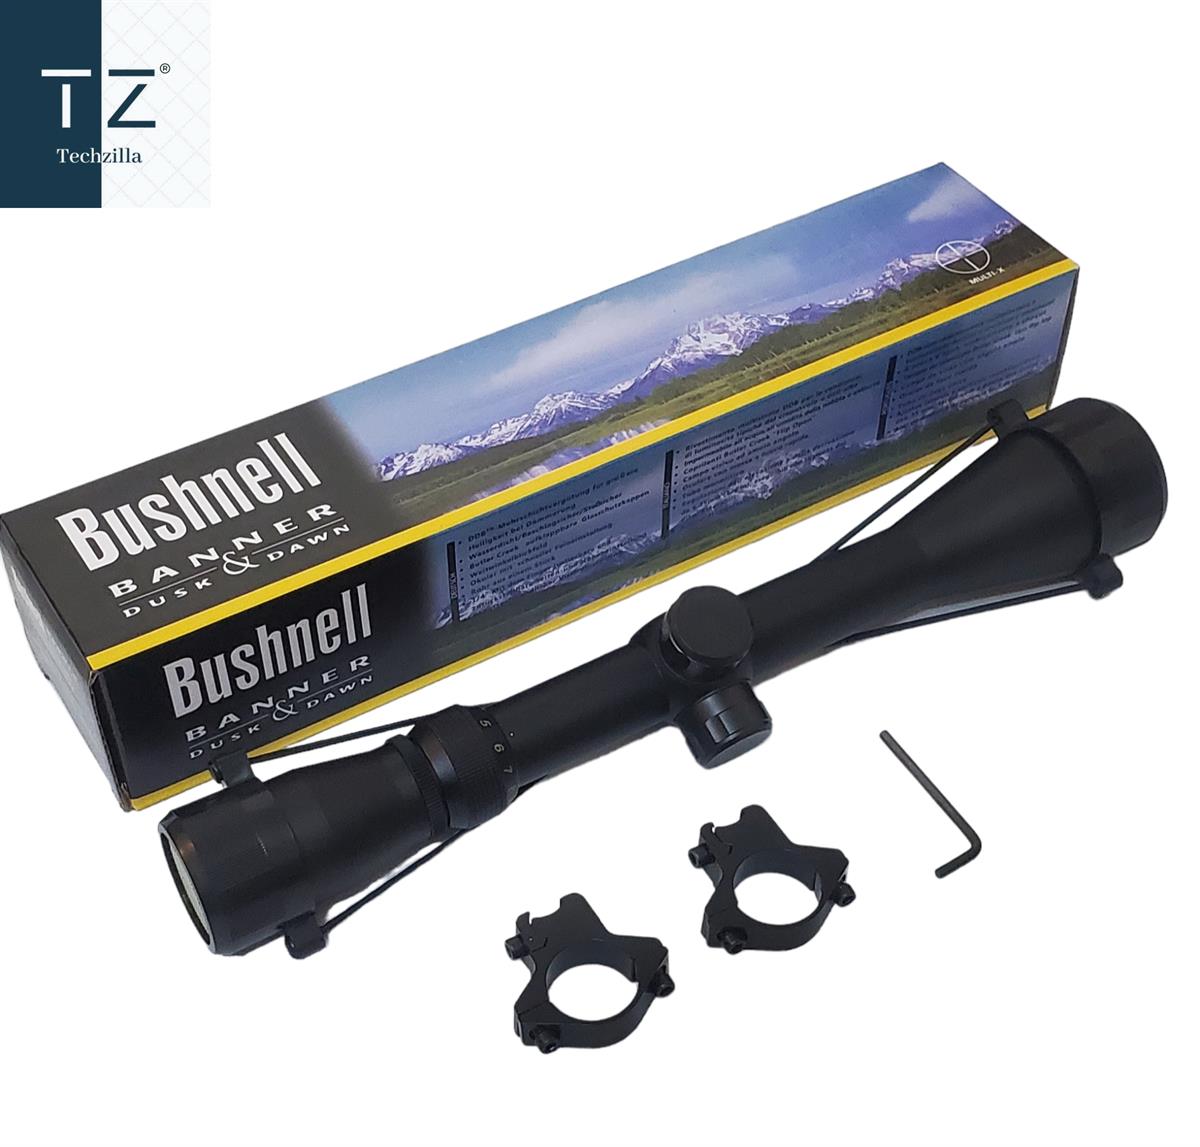 Bushnell Banner 3-9x40mm Riflescope, Dusk & Dawn Hunting Riflescope